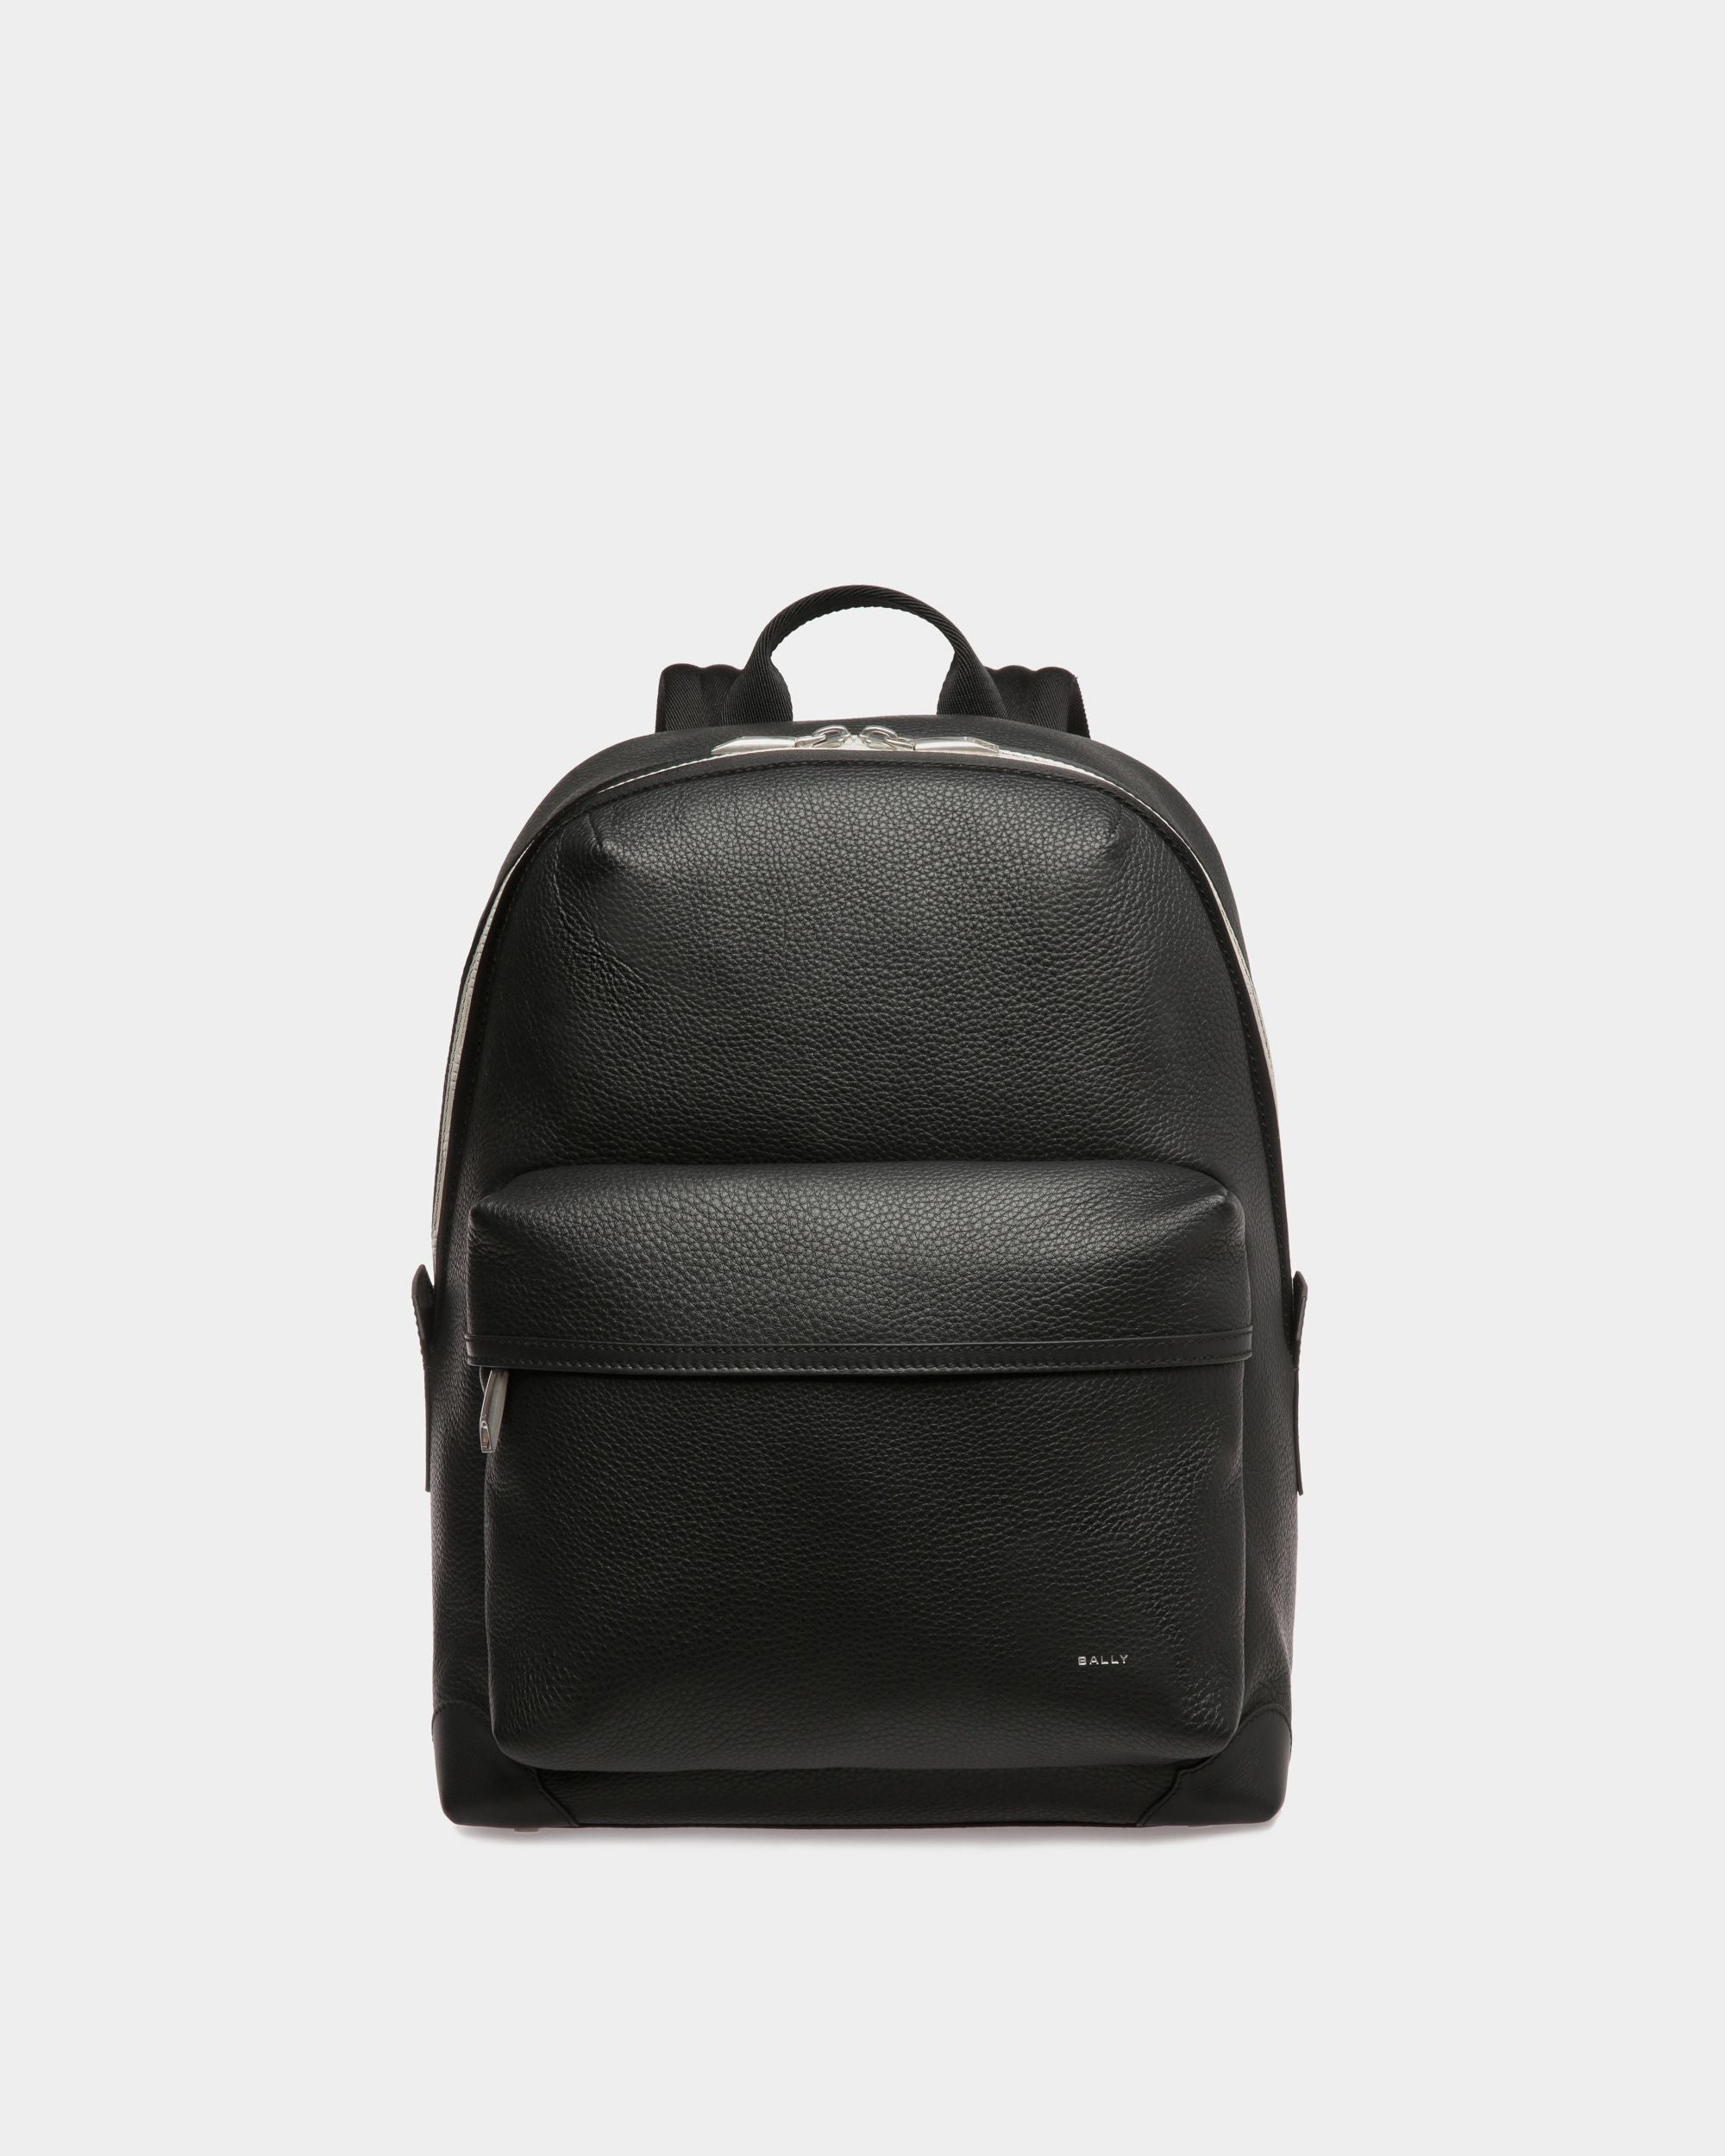 Bord Trecky | Men's Backpack | Black Leather | Bally | Still Life Front